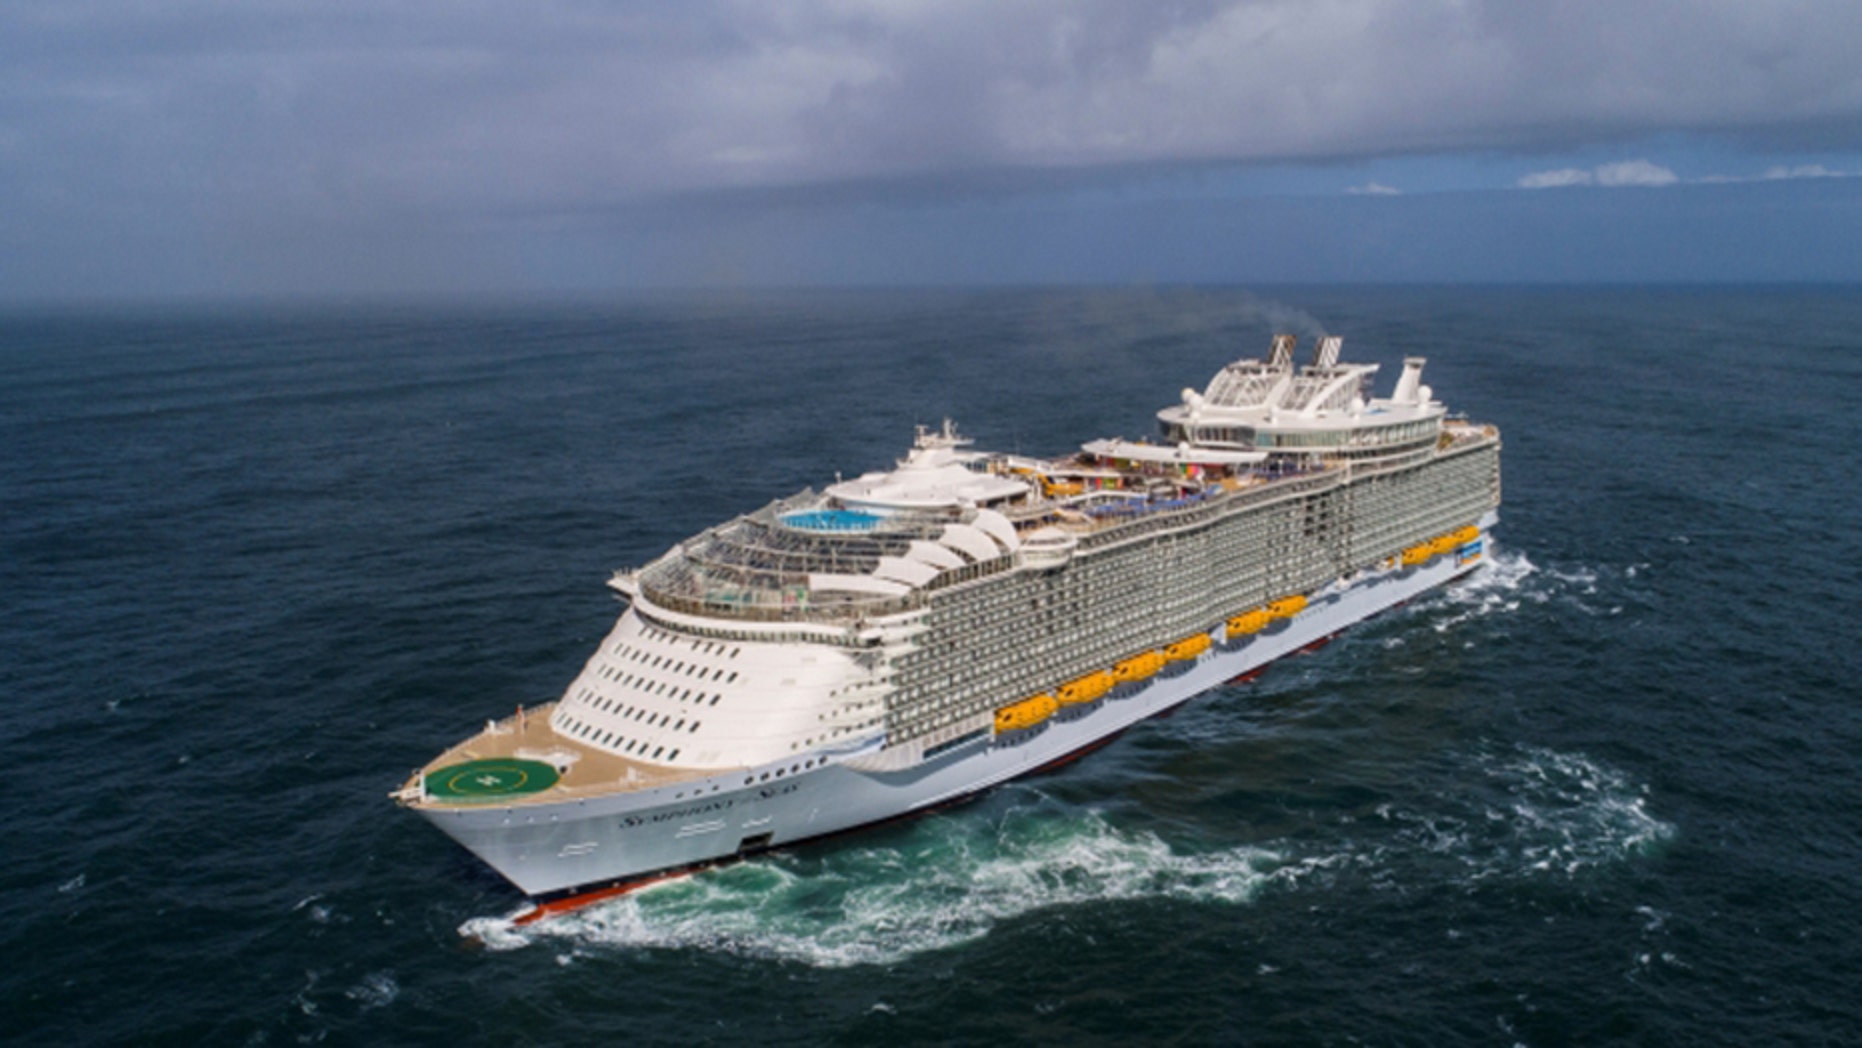 world's largest cruise ship sets sail